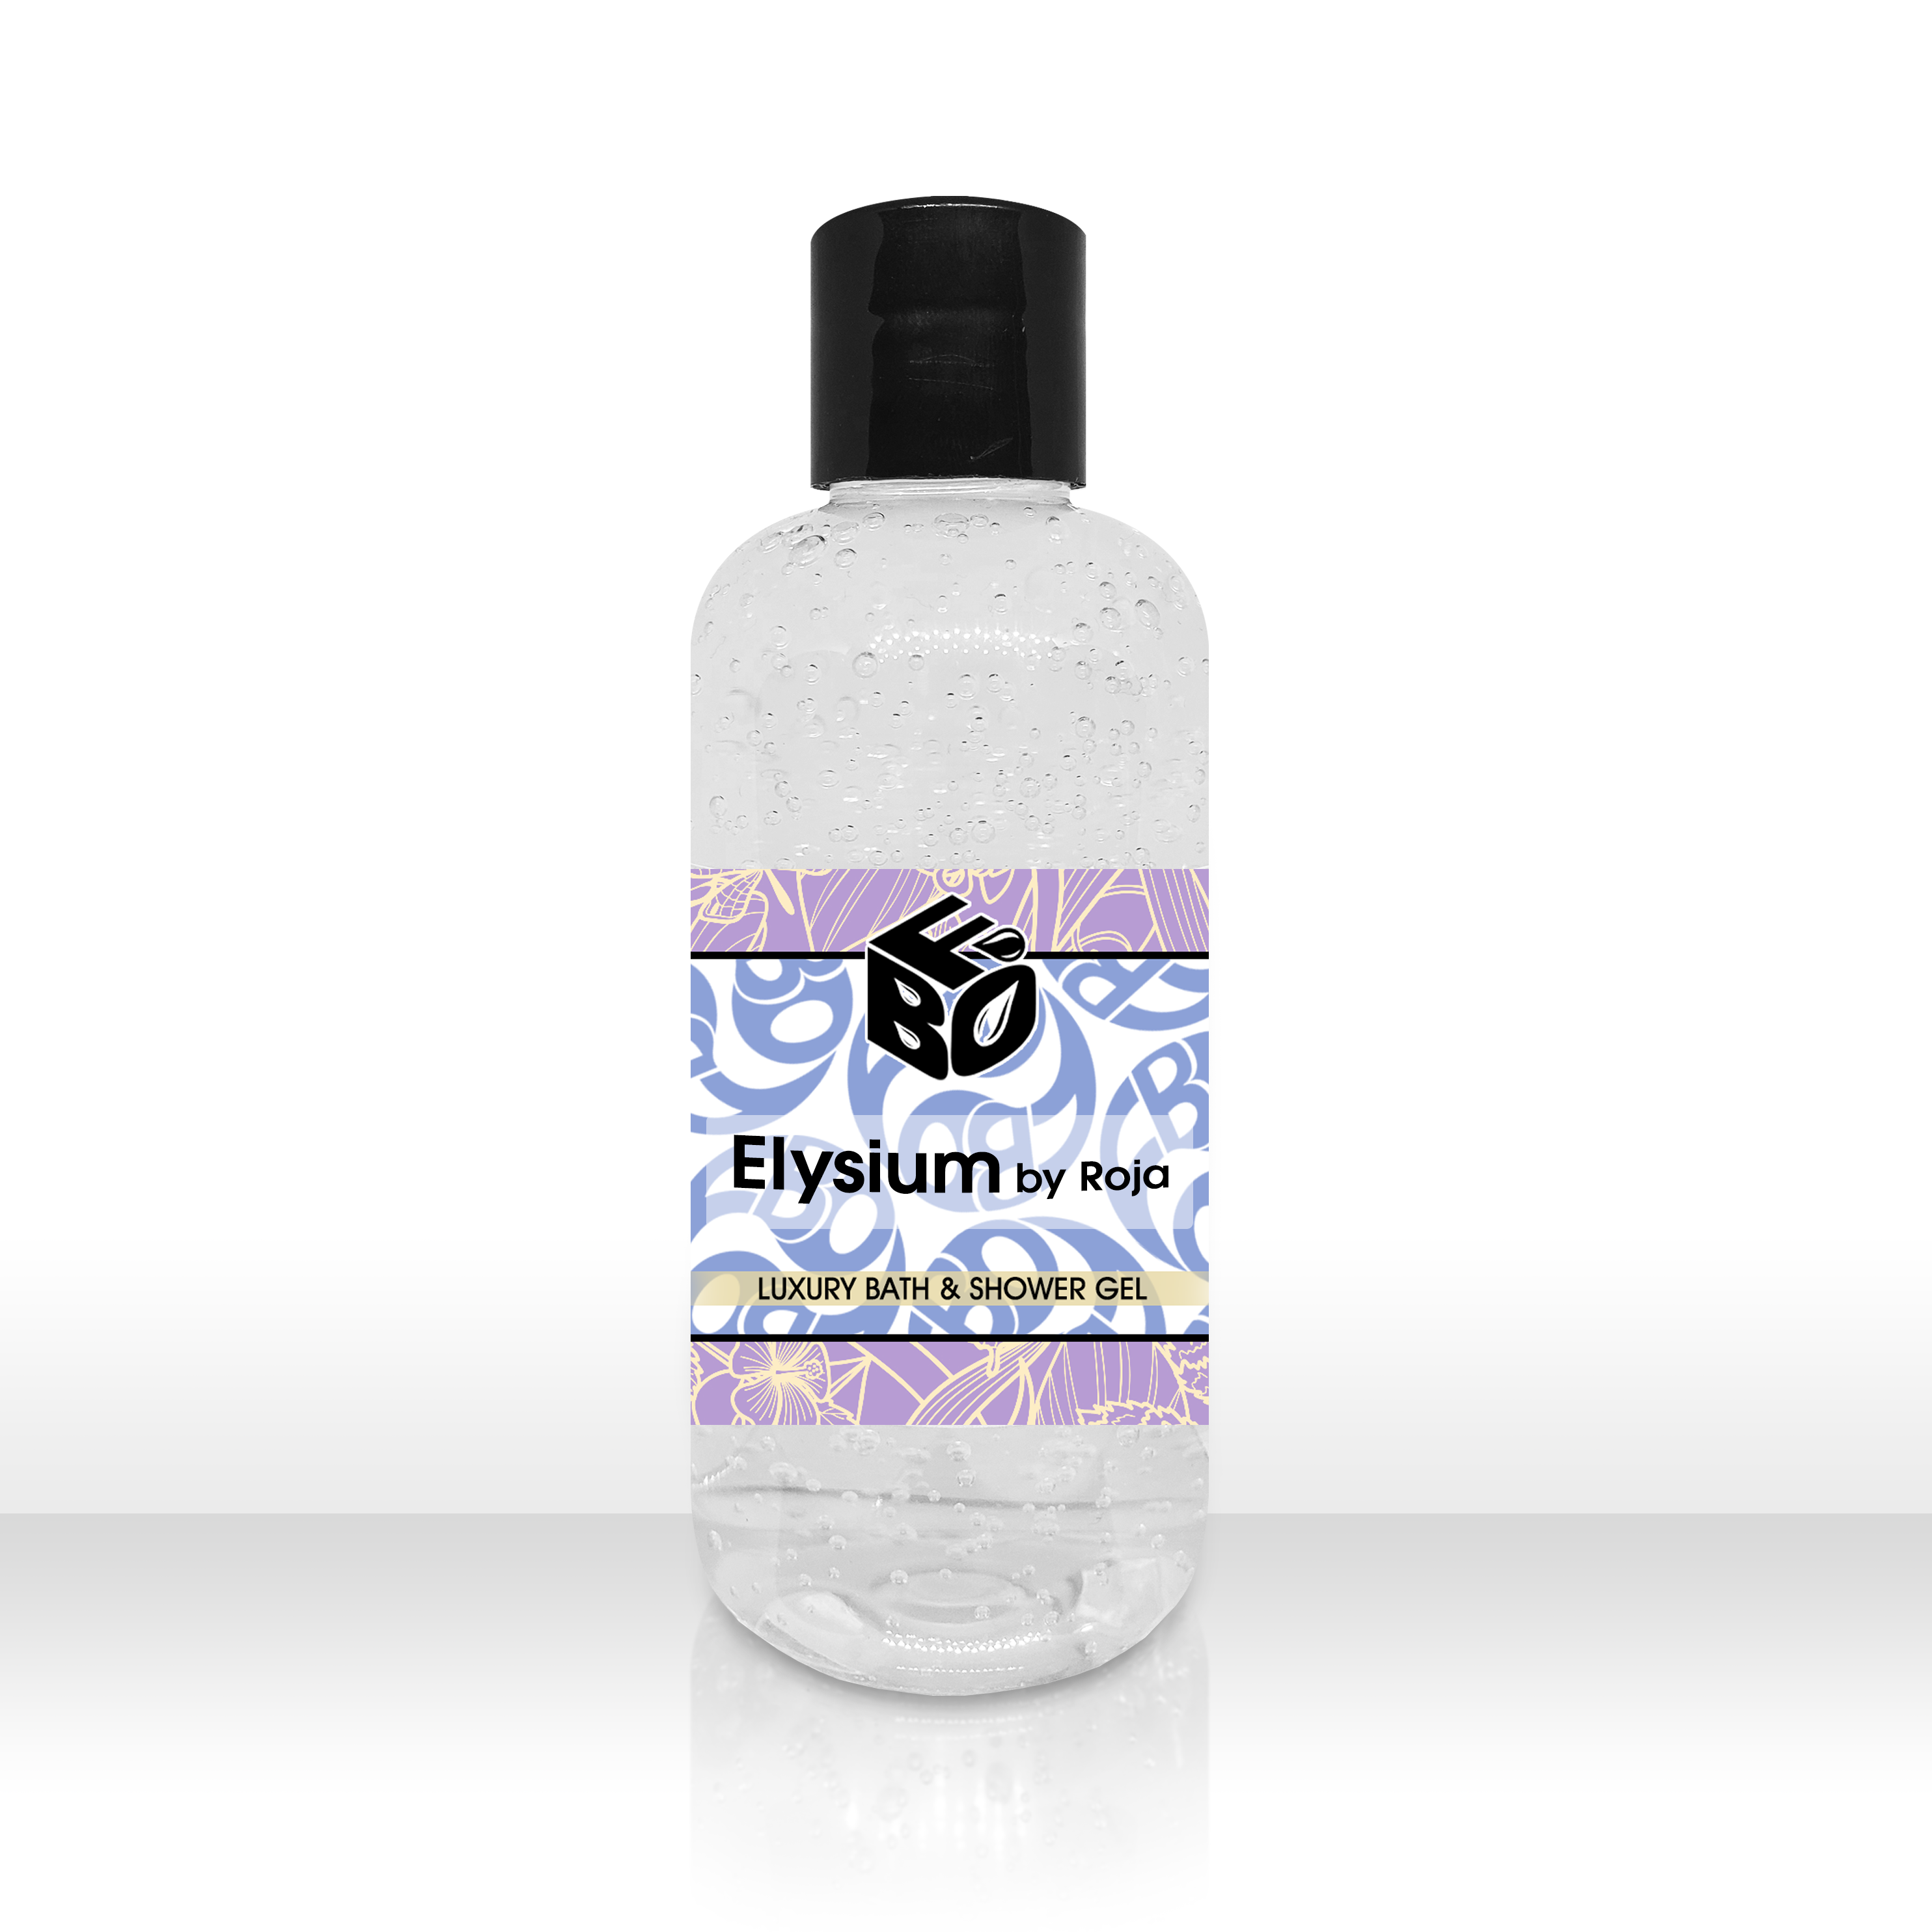 Compare Aroma to Elysium®